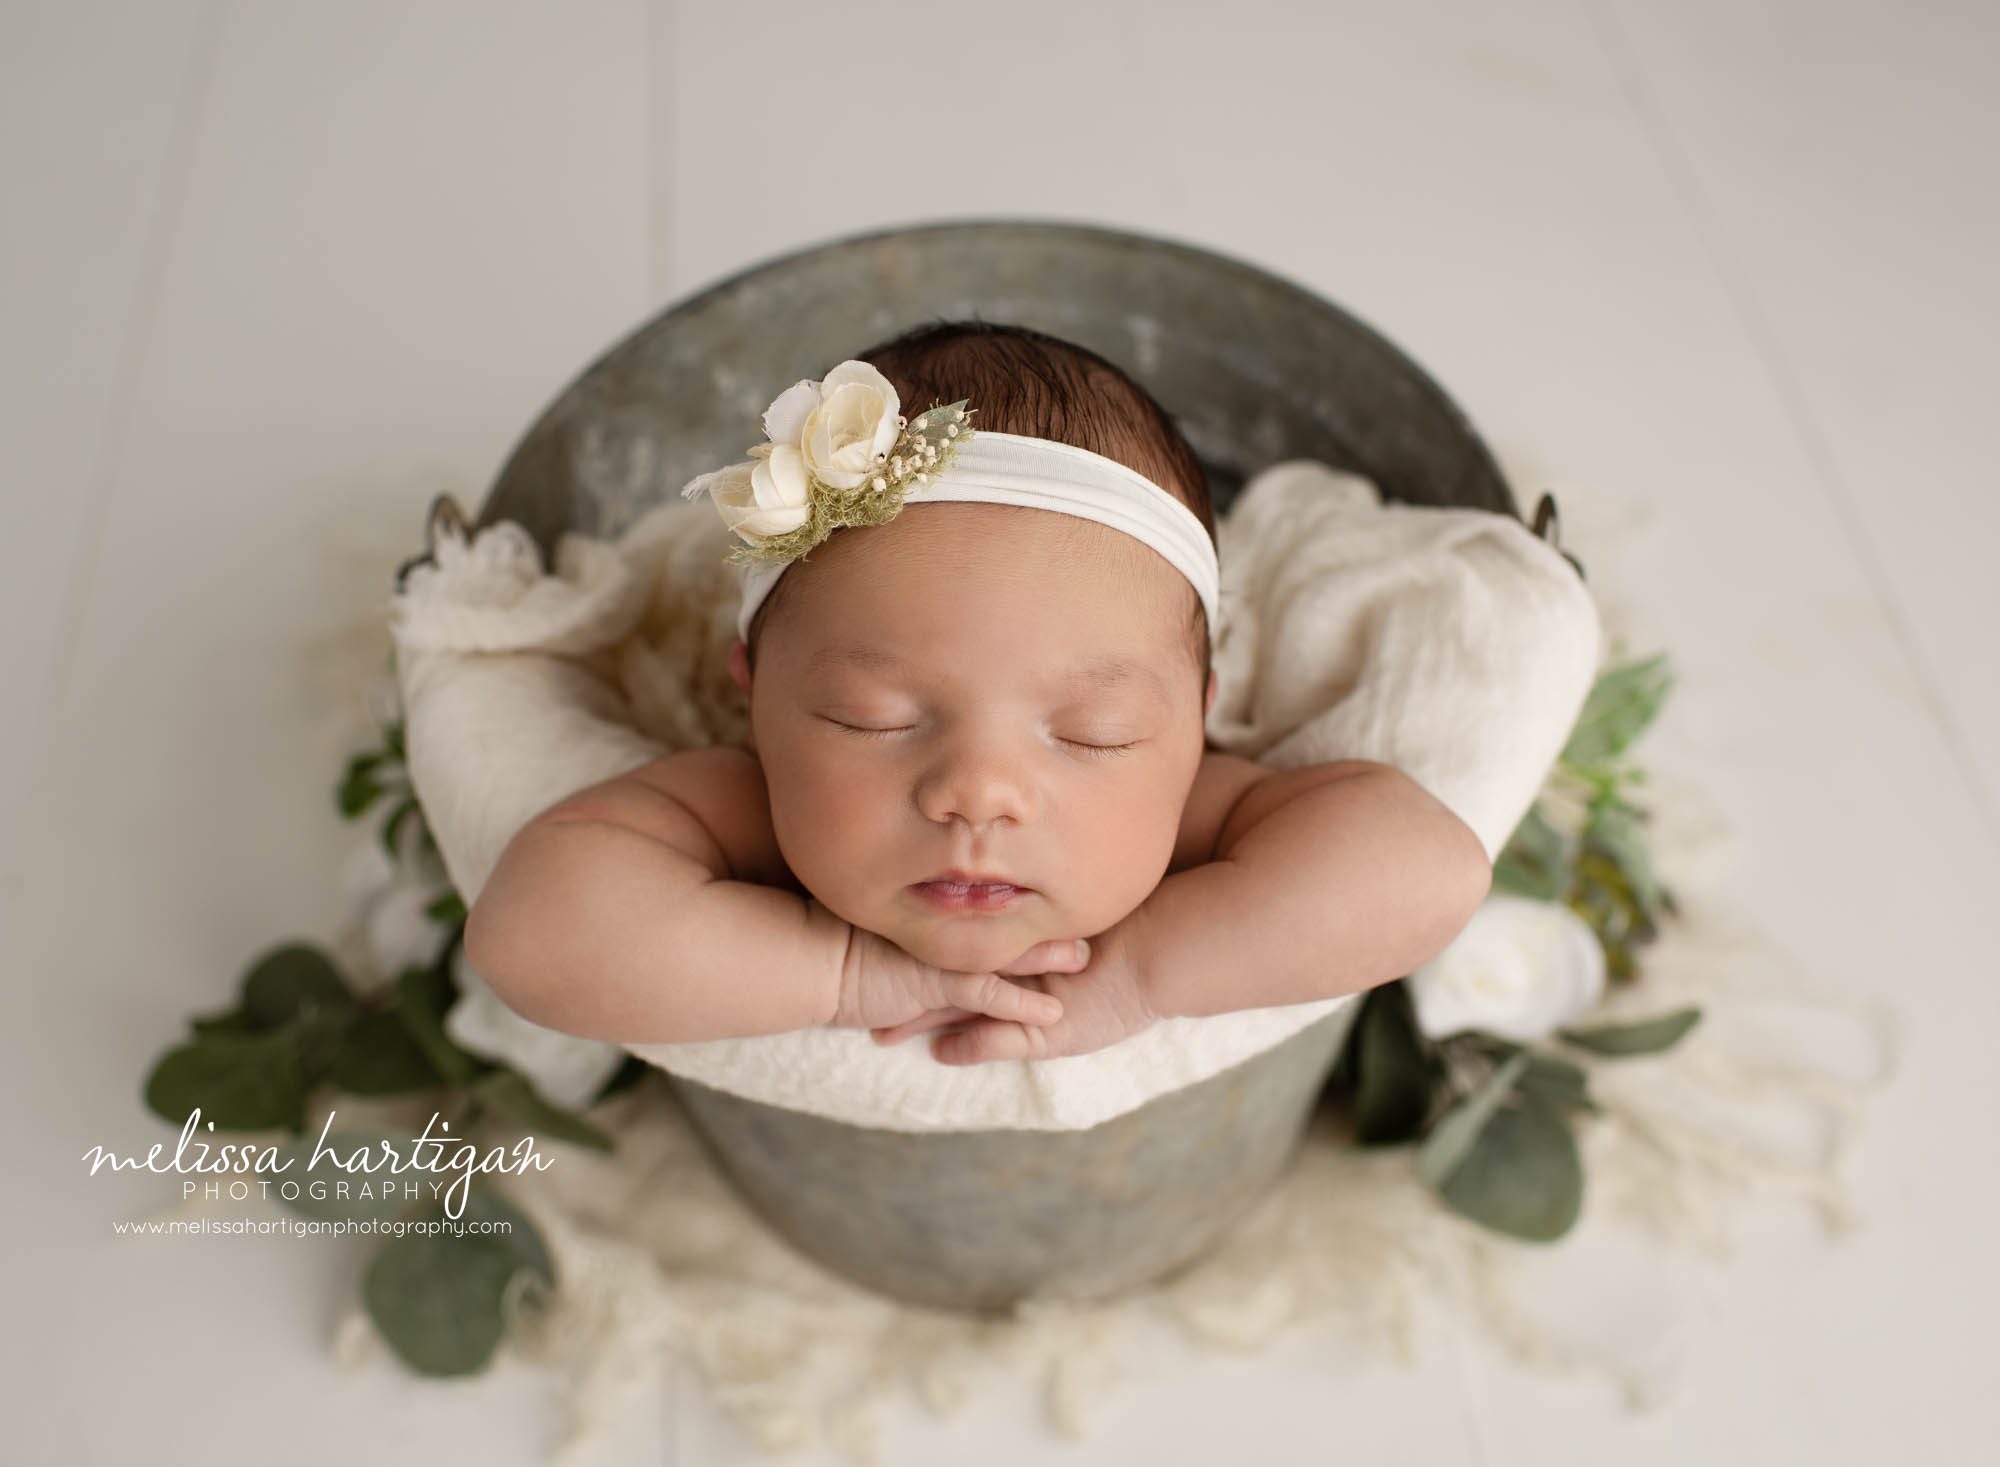 newborn baby girl posed in metal bucket wearing cream floral headband